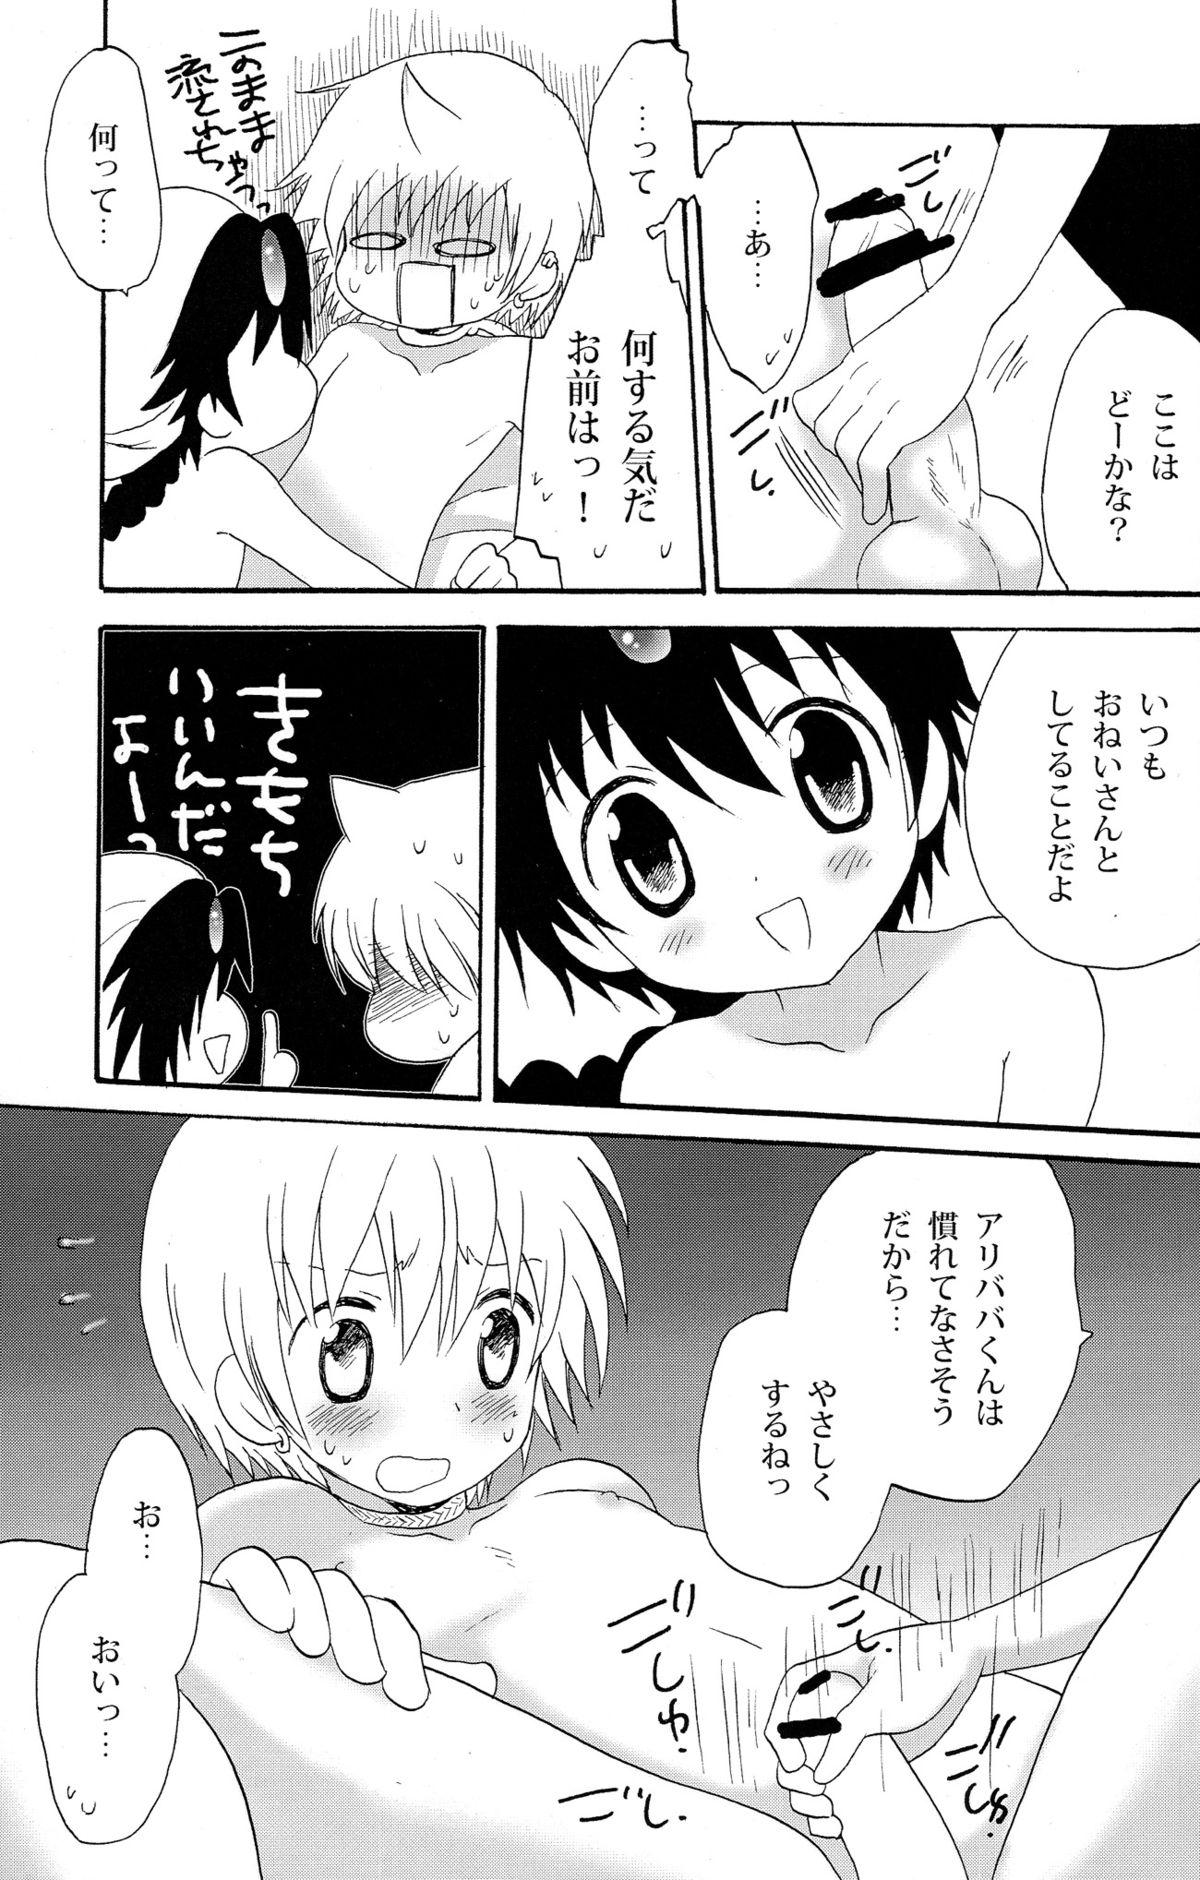 Pussylicking Senya Ichiya Night Kiss Club - Magi the labyrinth of magic Humiliation - Page 7